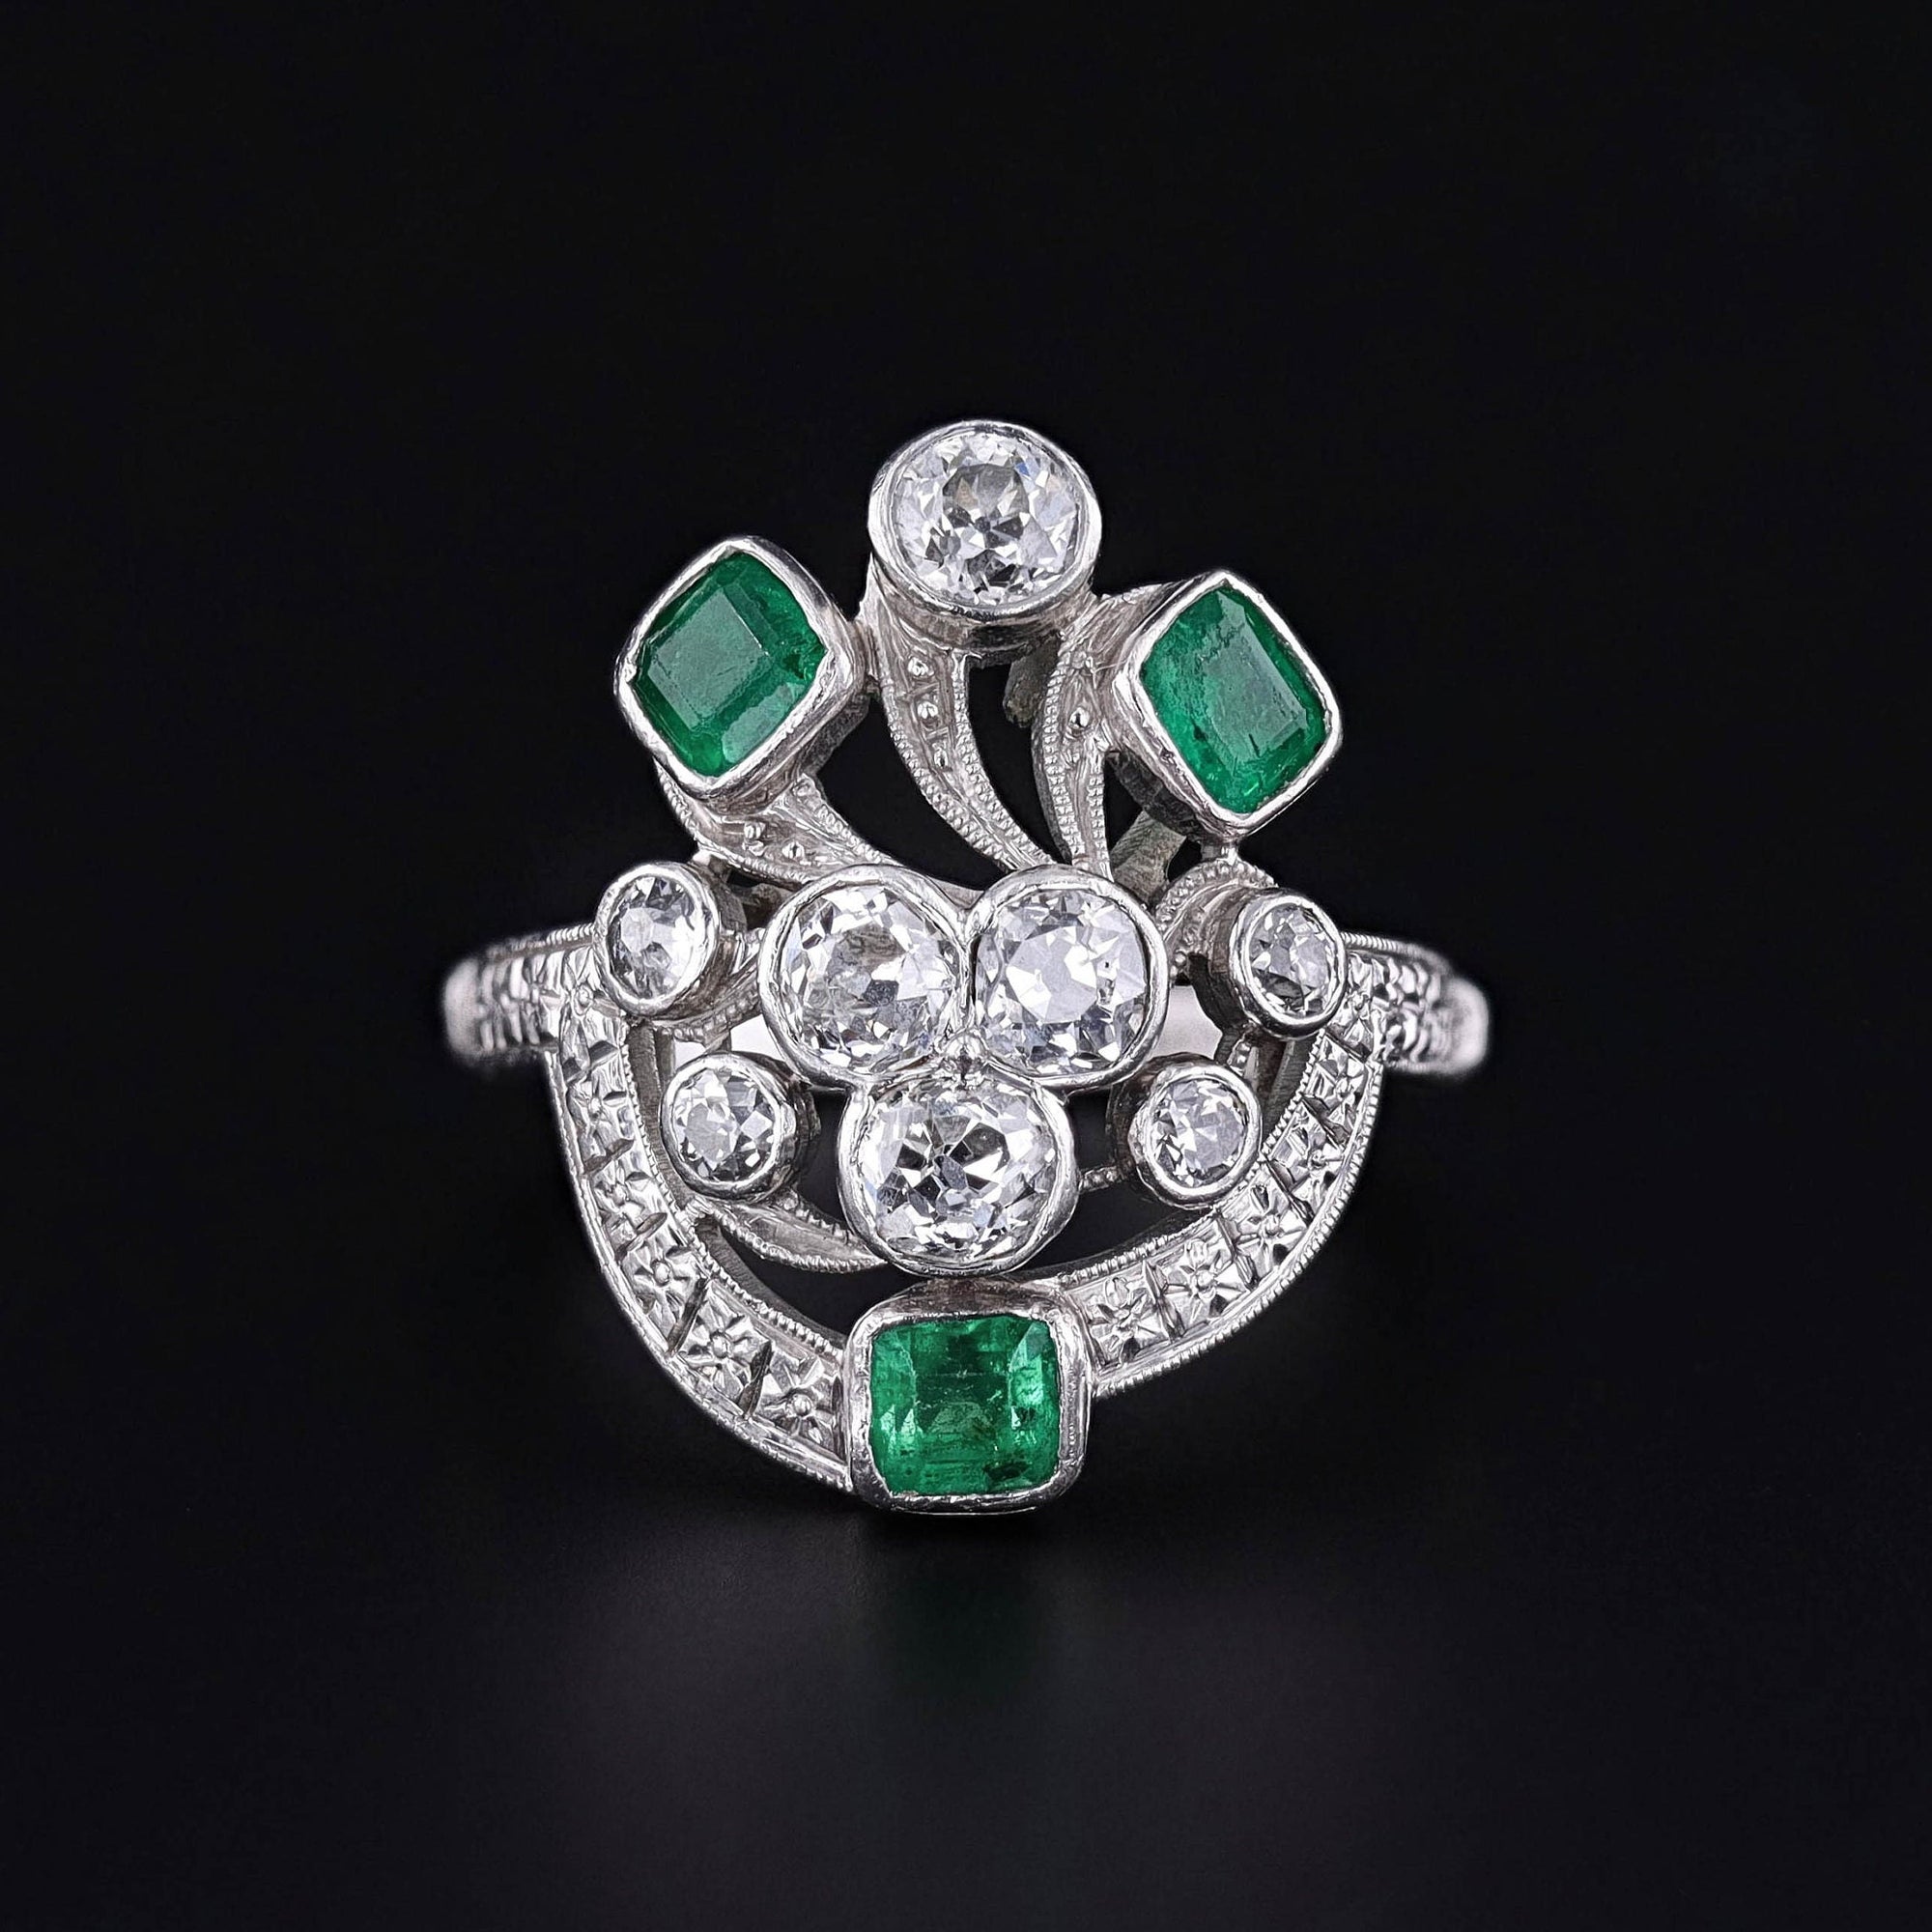 Vintage Art Deco Emerald and Diamond Ring of Platinum